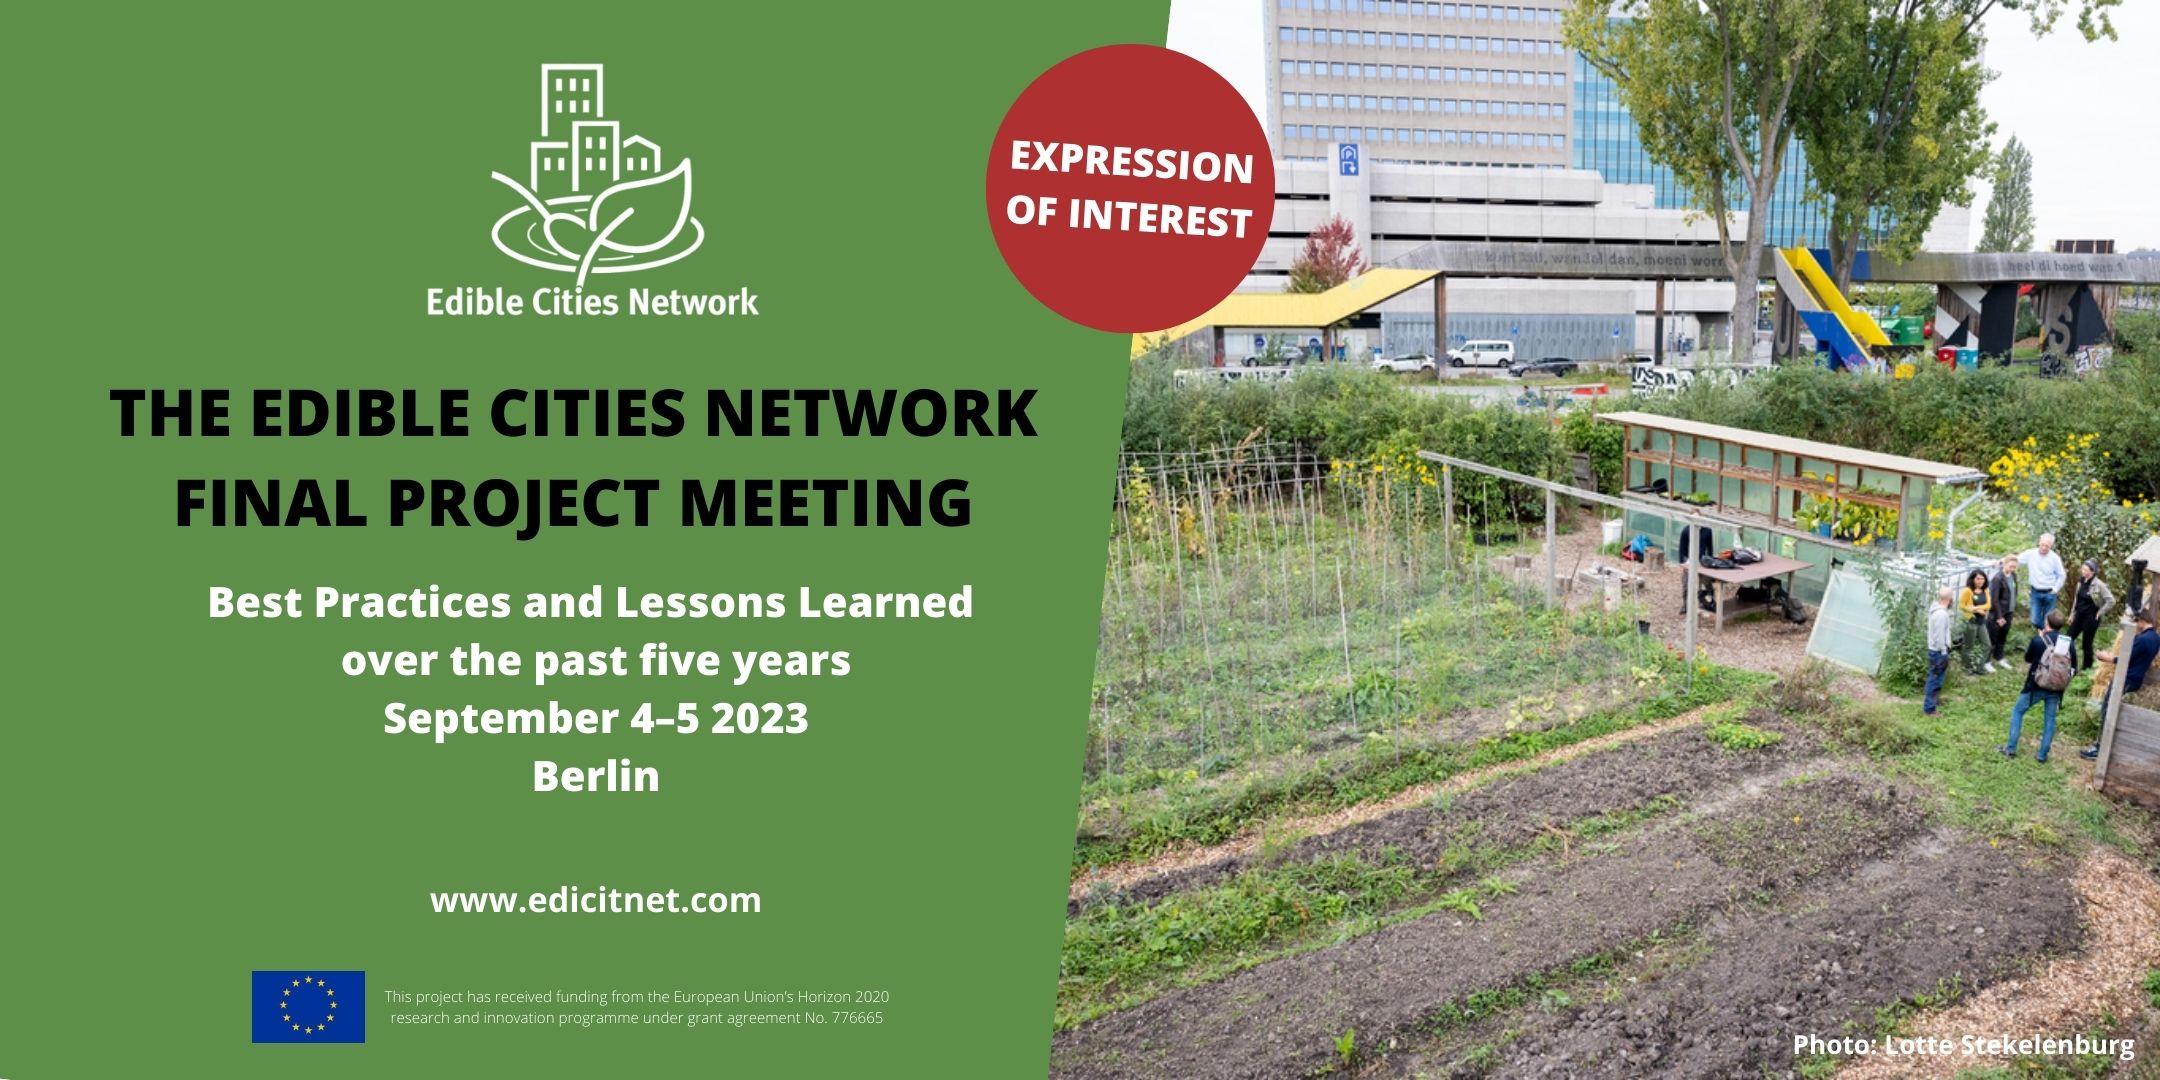 final project meeting edible cities network berlin